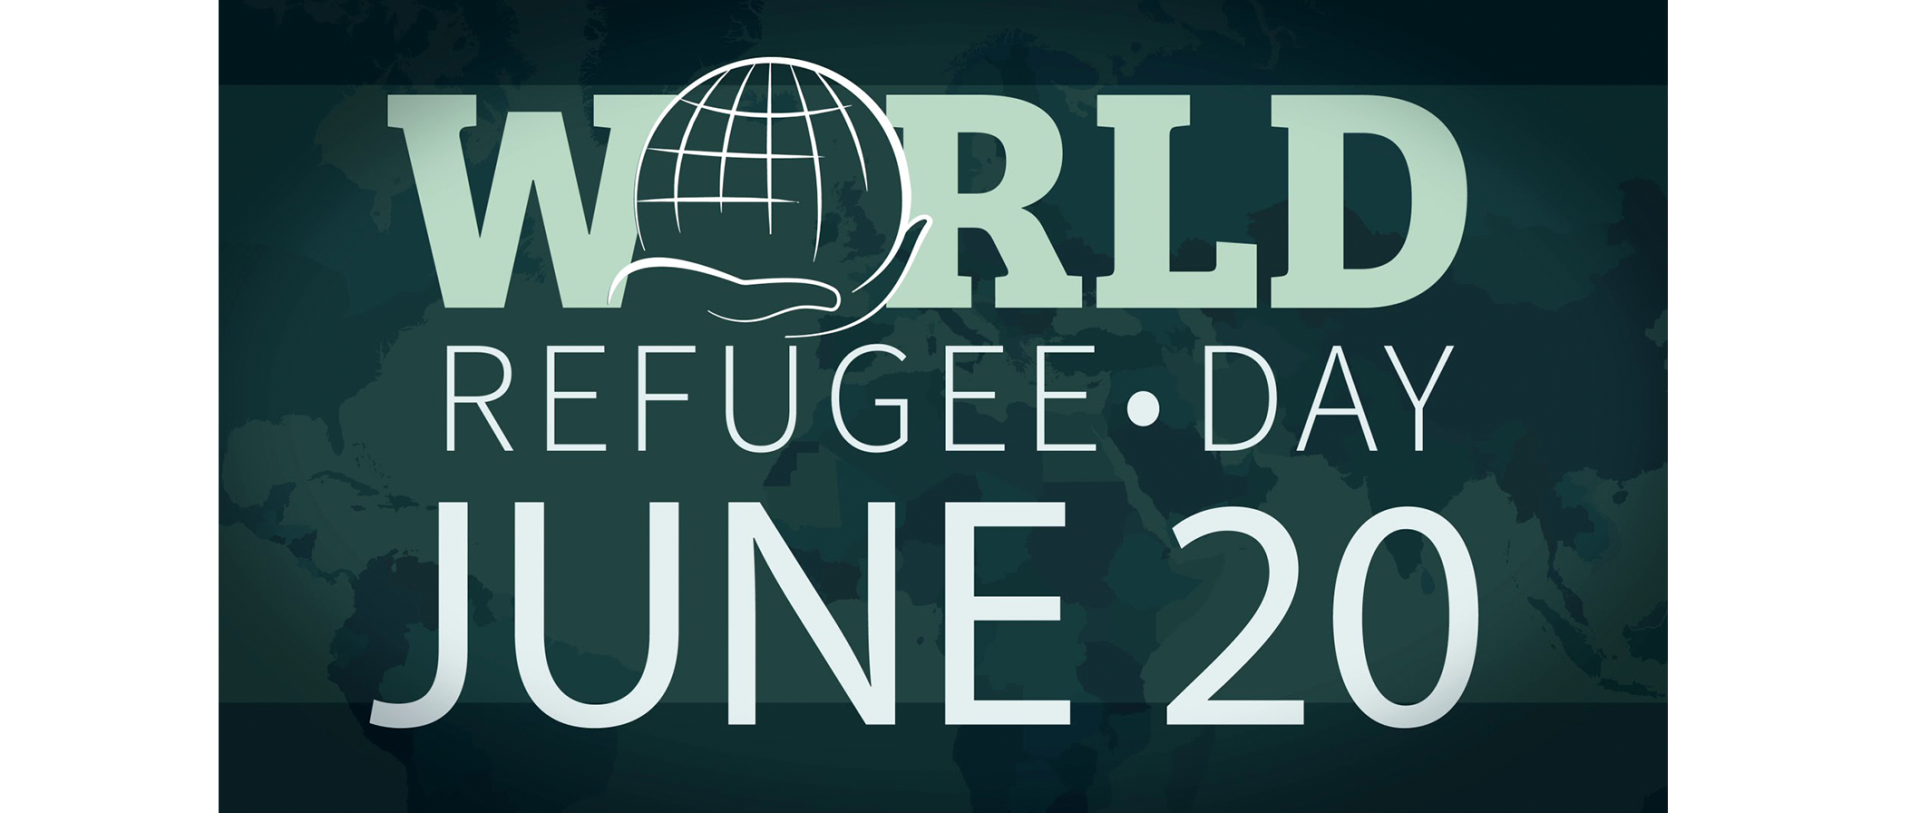 World Refugee Day